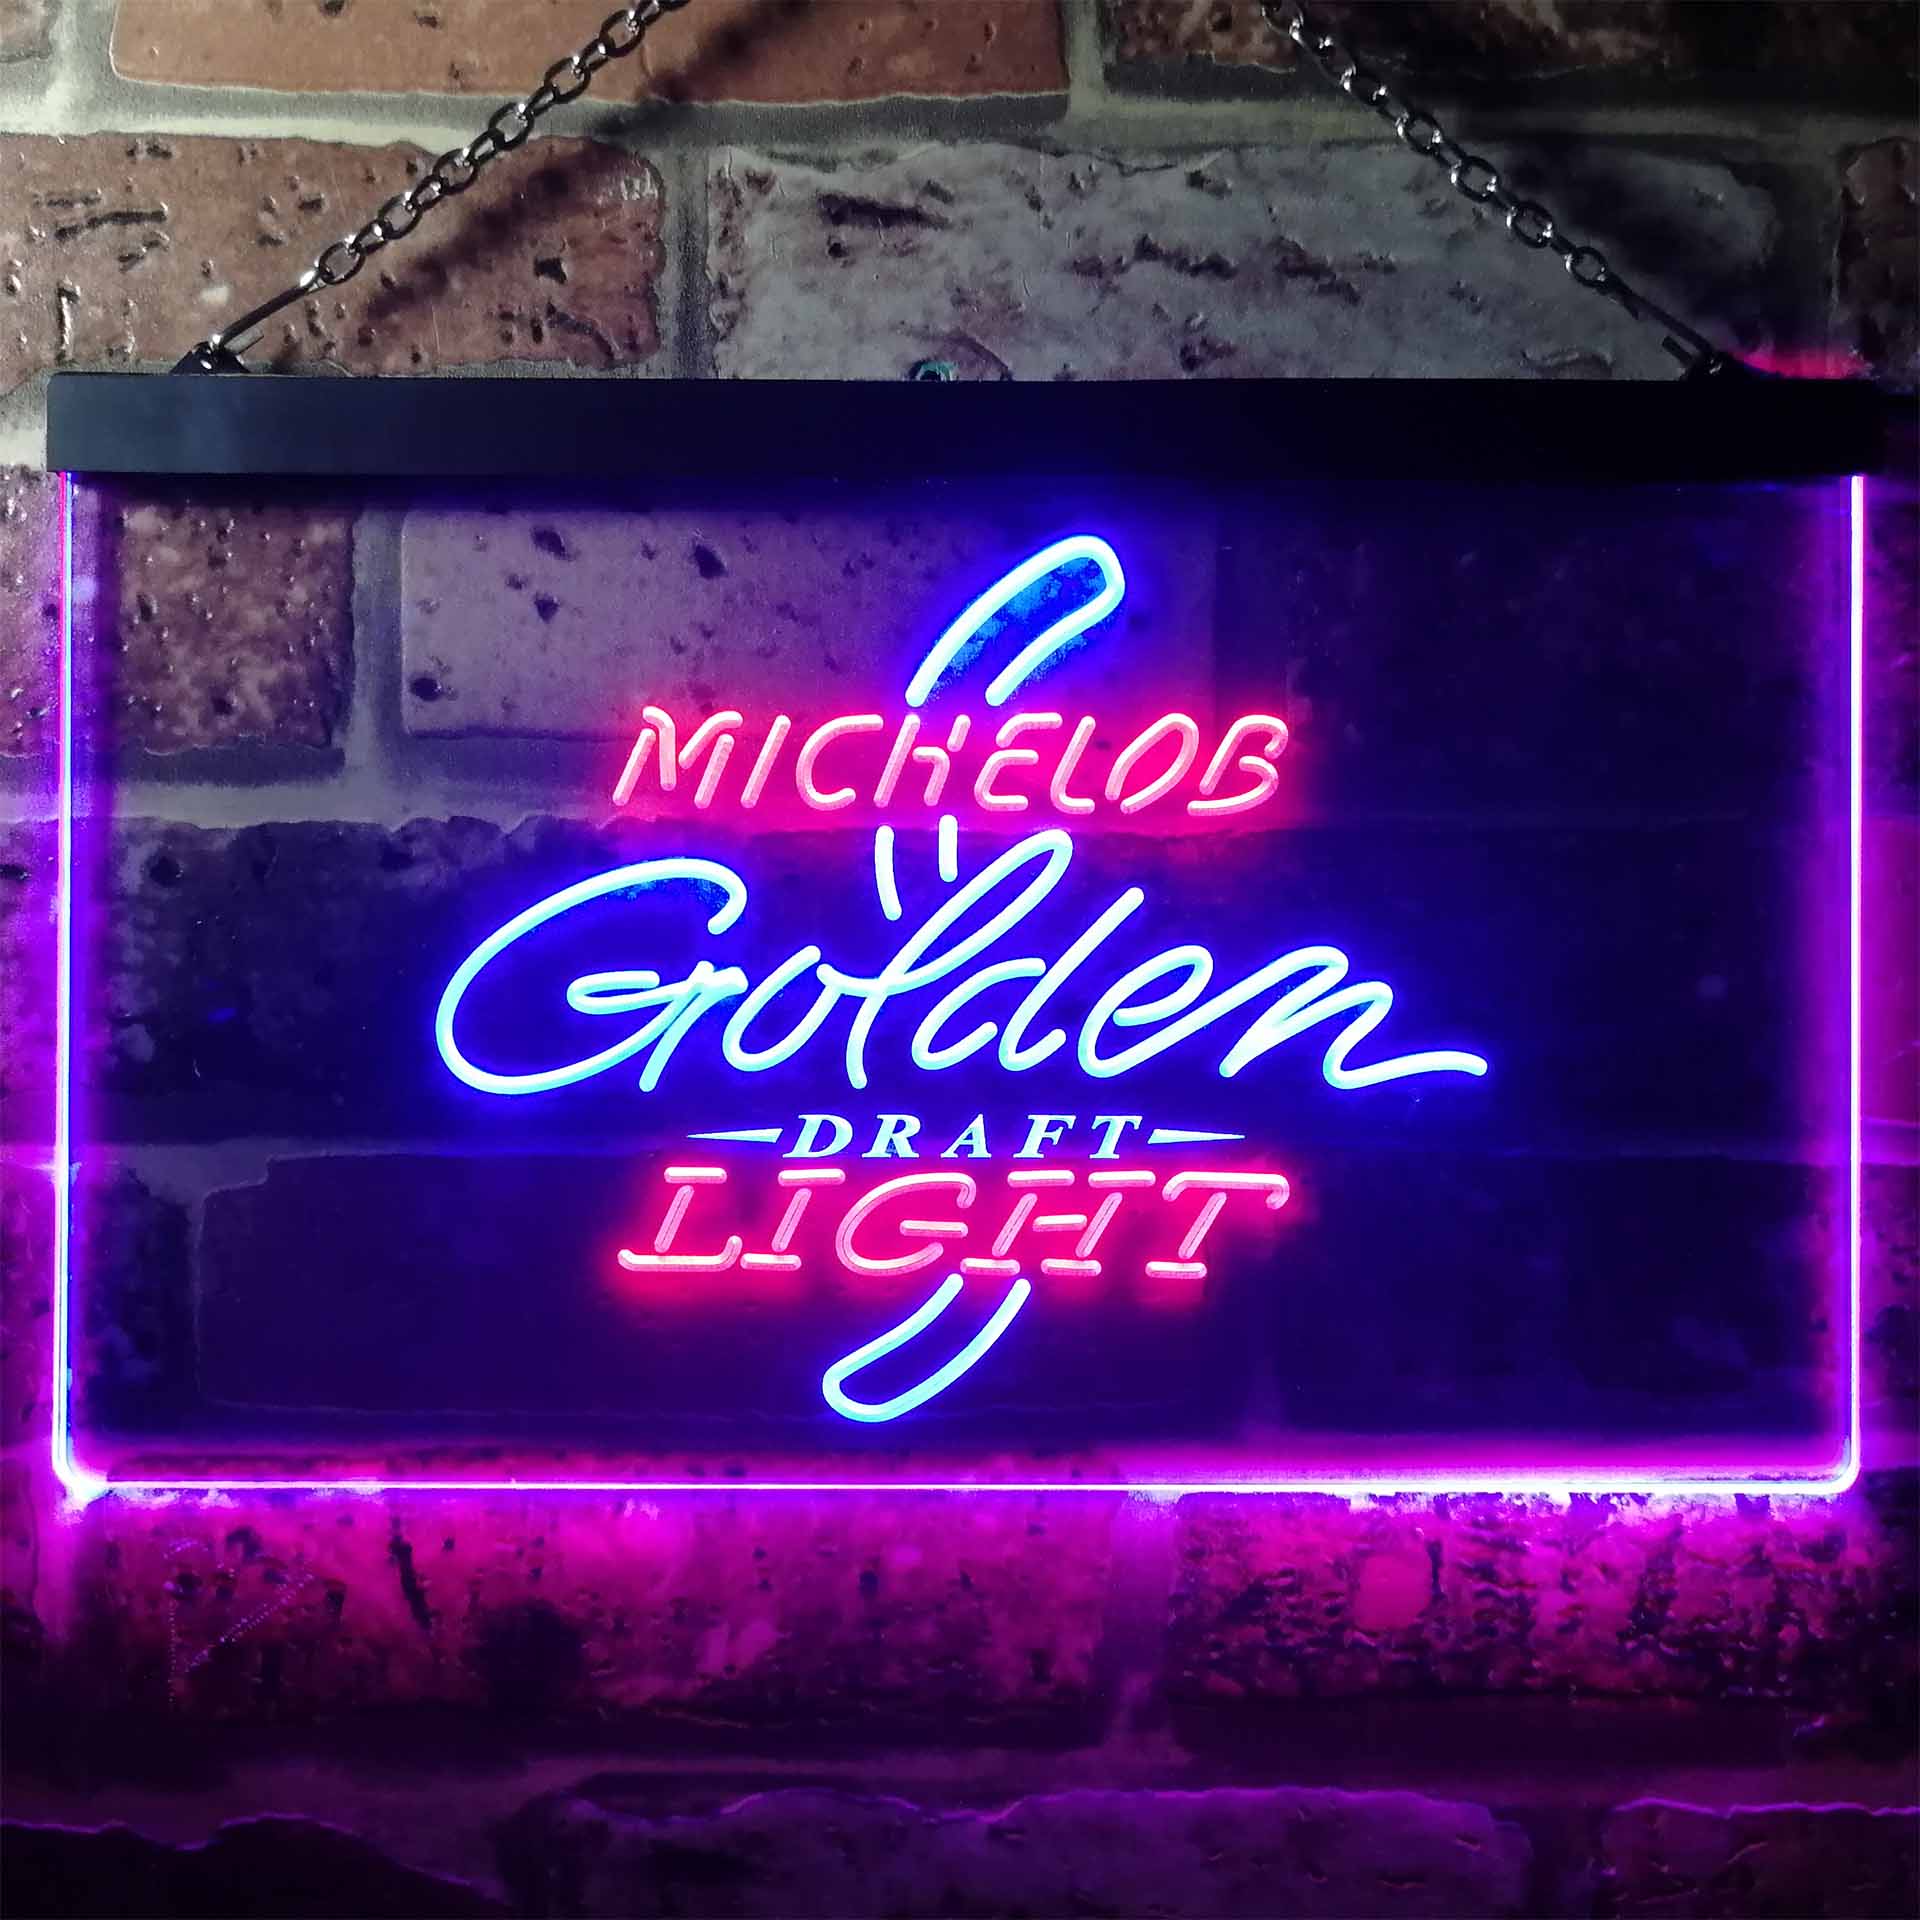 Michelob Golden Light Draft Neon LED Sign